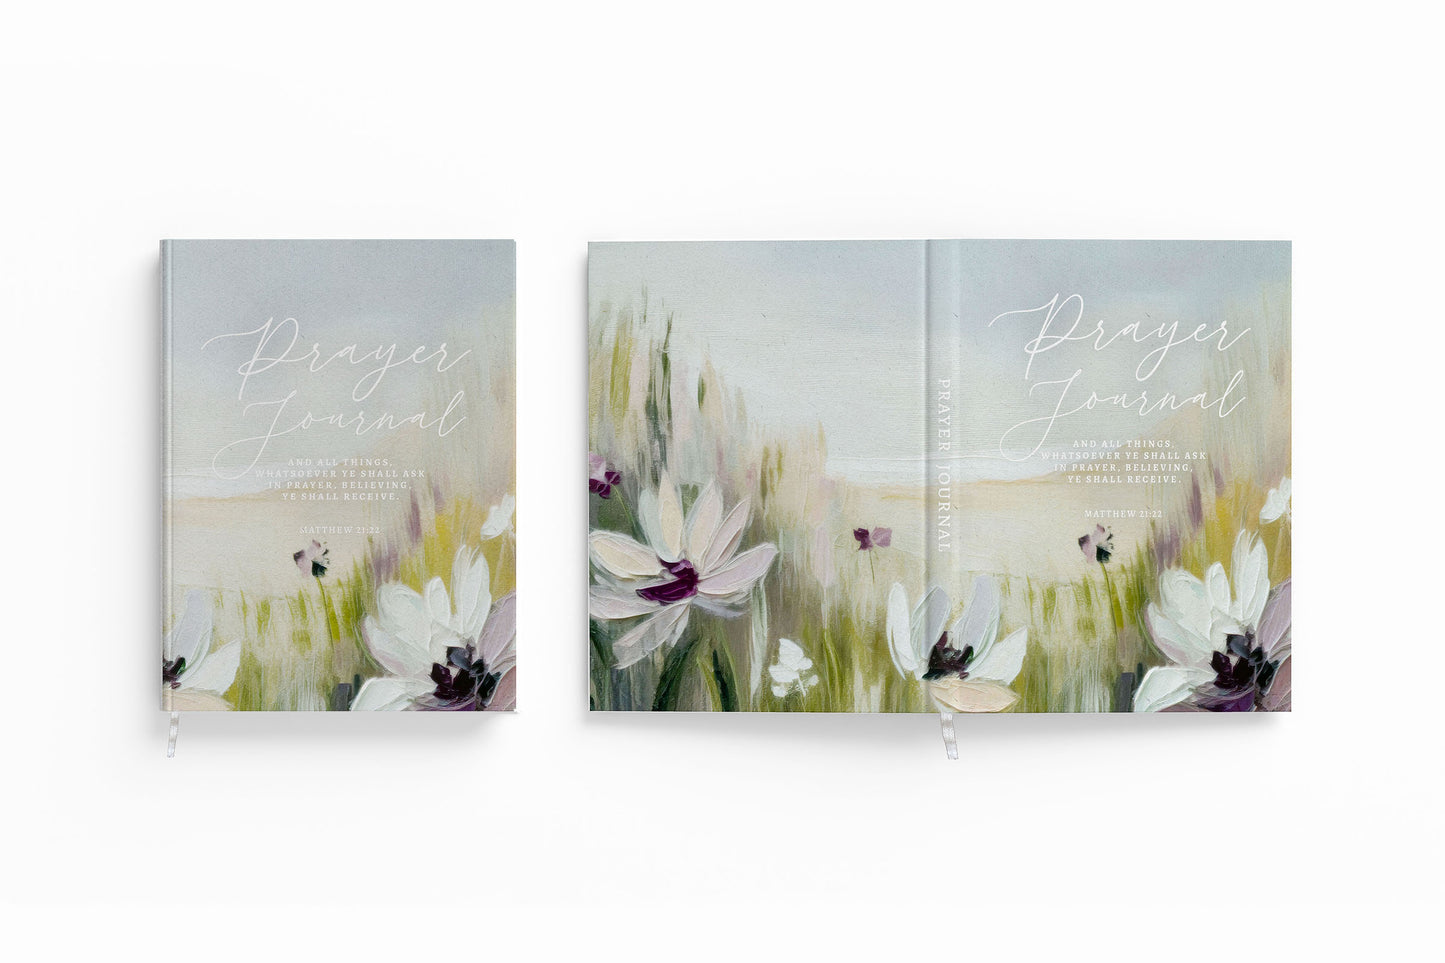 Floral Prayer Journal Notebook: By Faith Theme